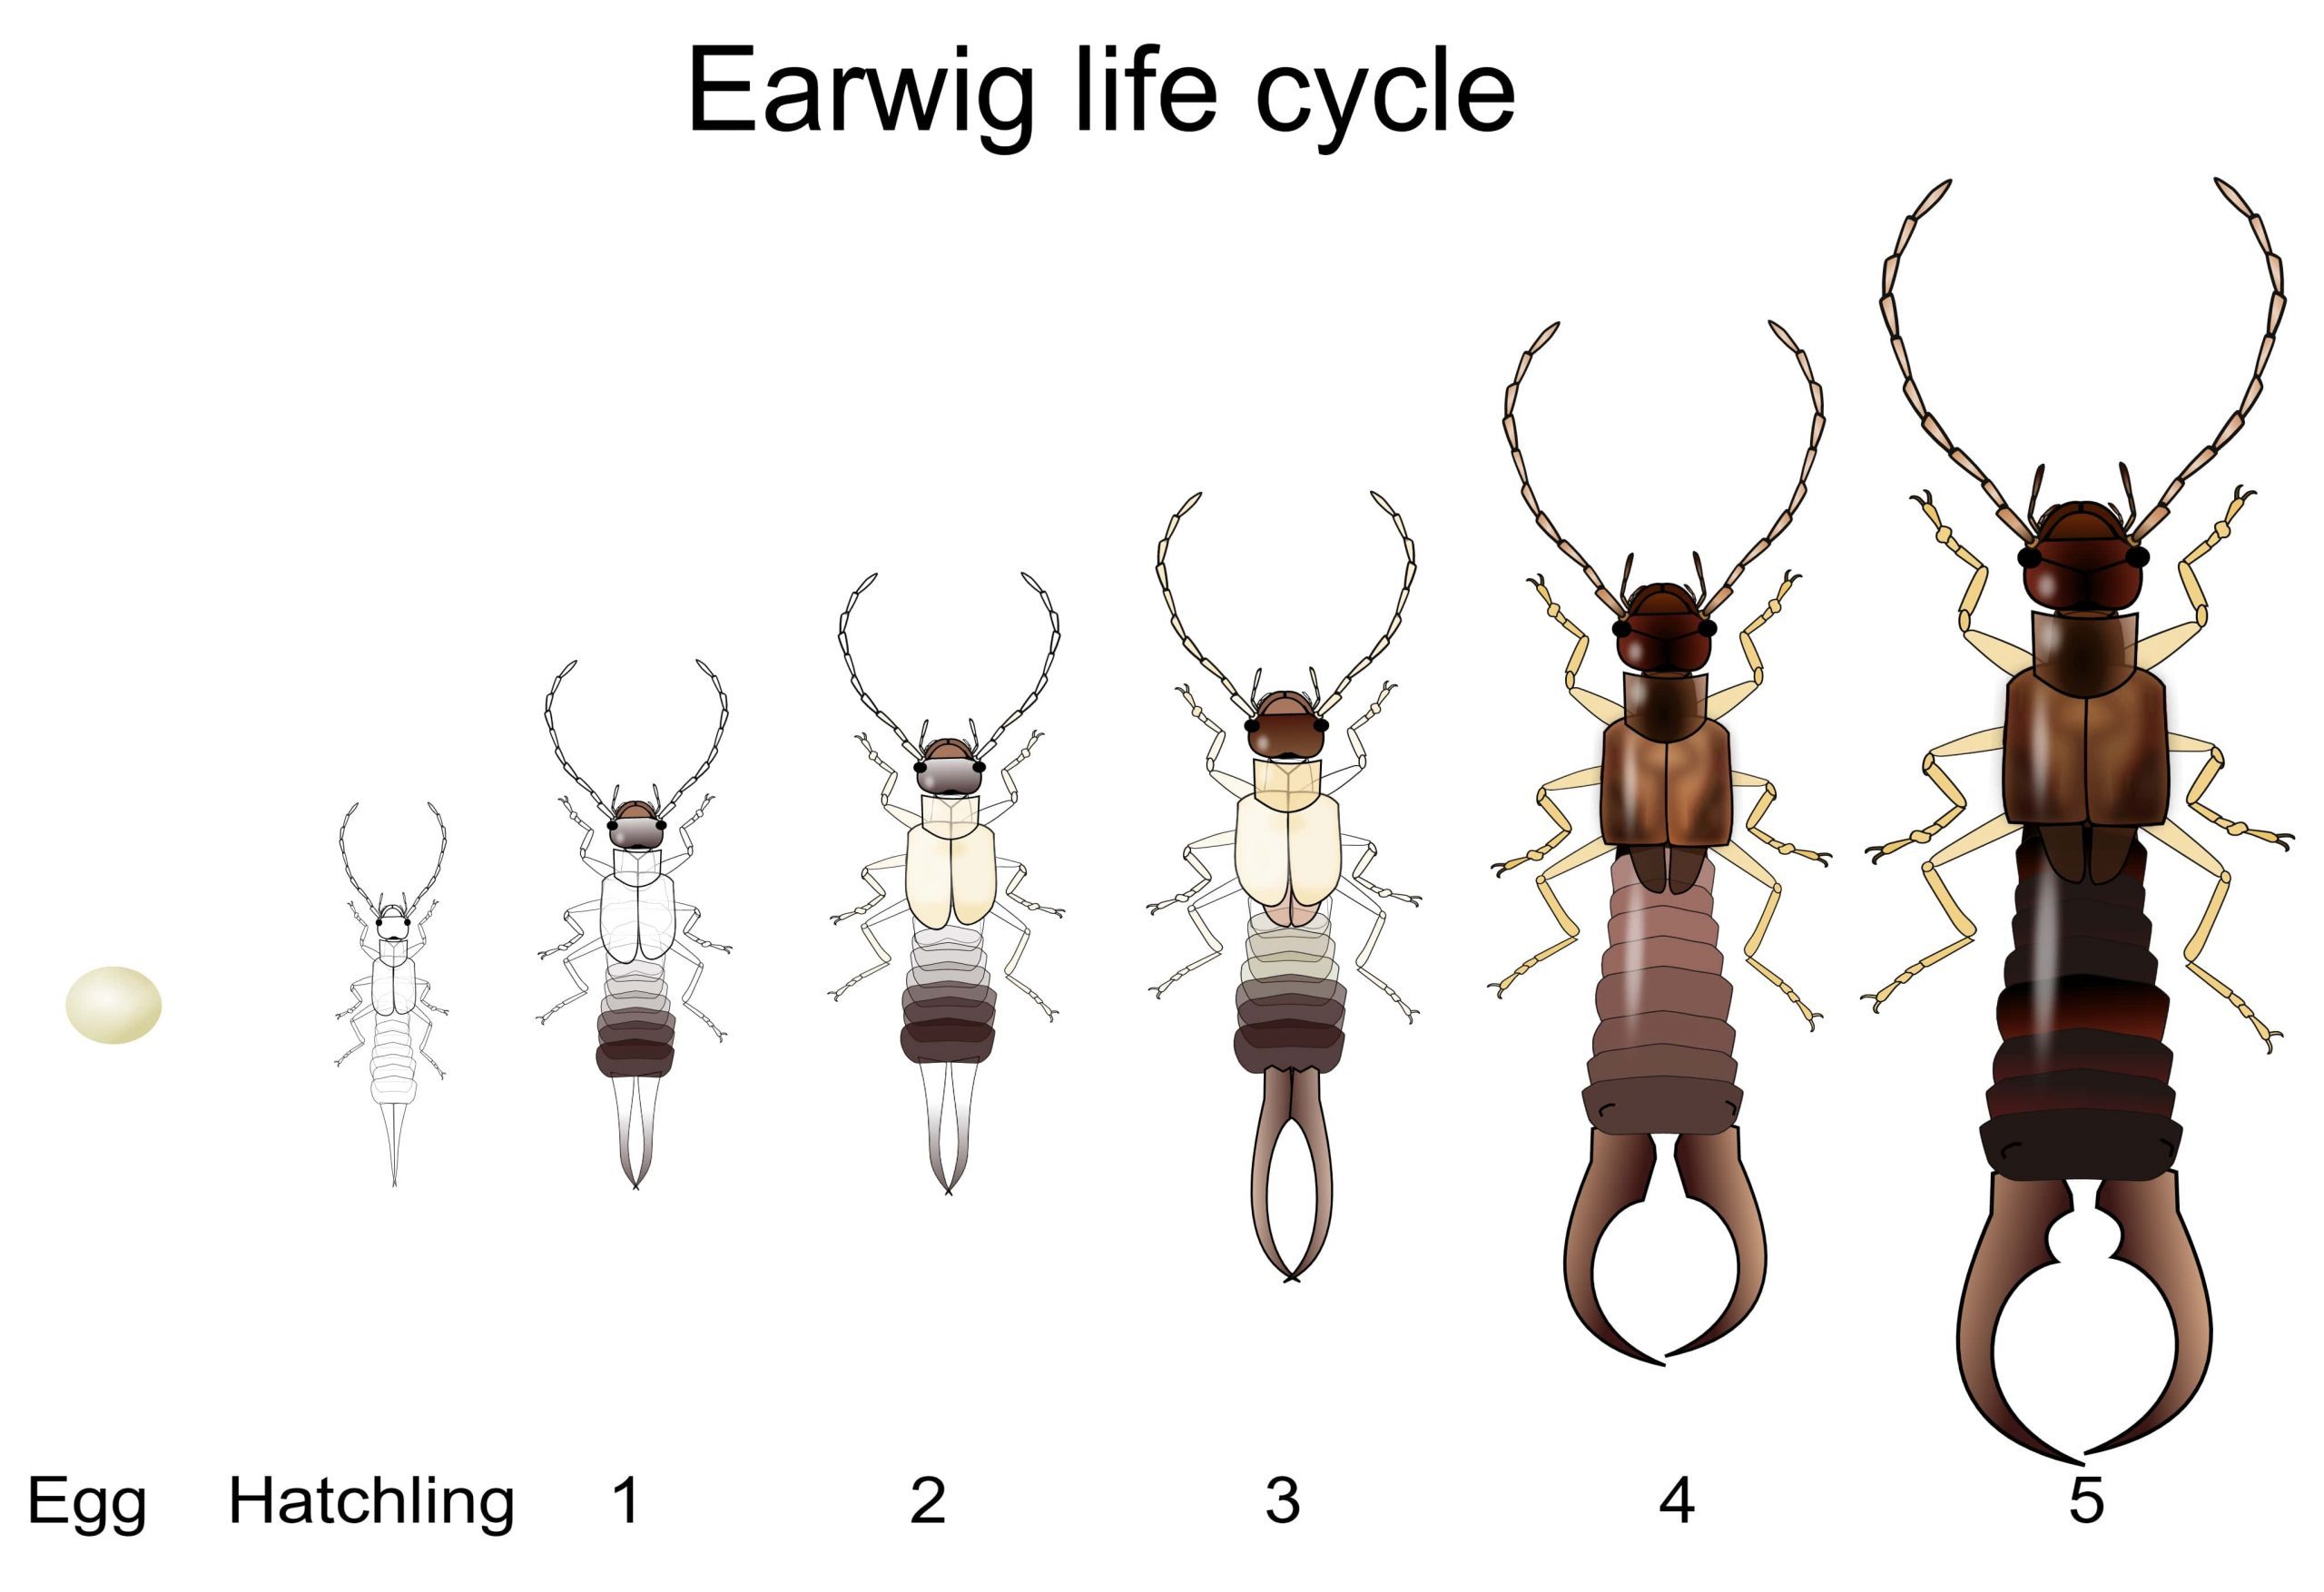 Earwig Life Cycle Egg, Baby, and Adult Earwig Stages